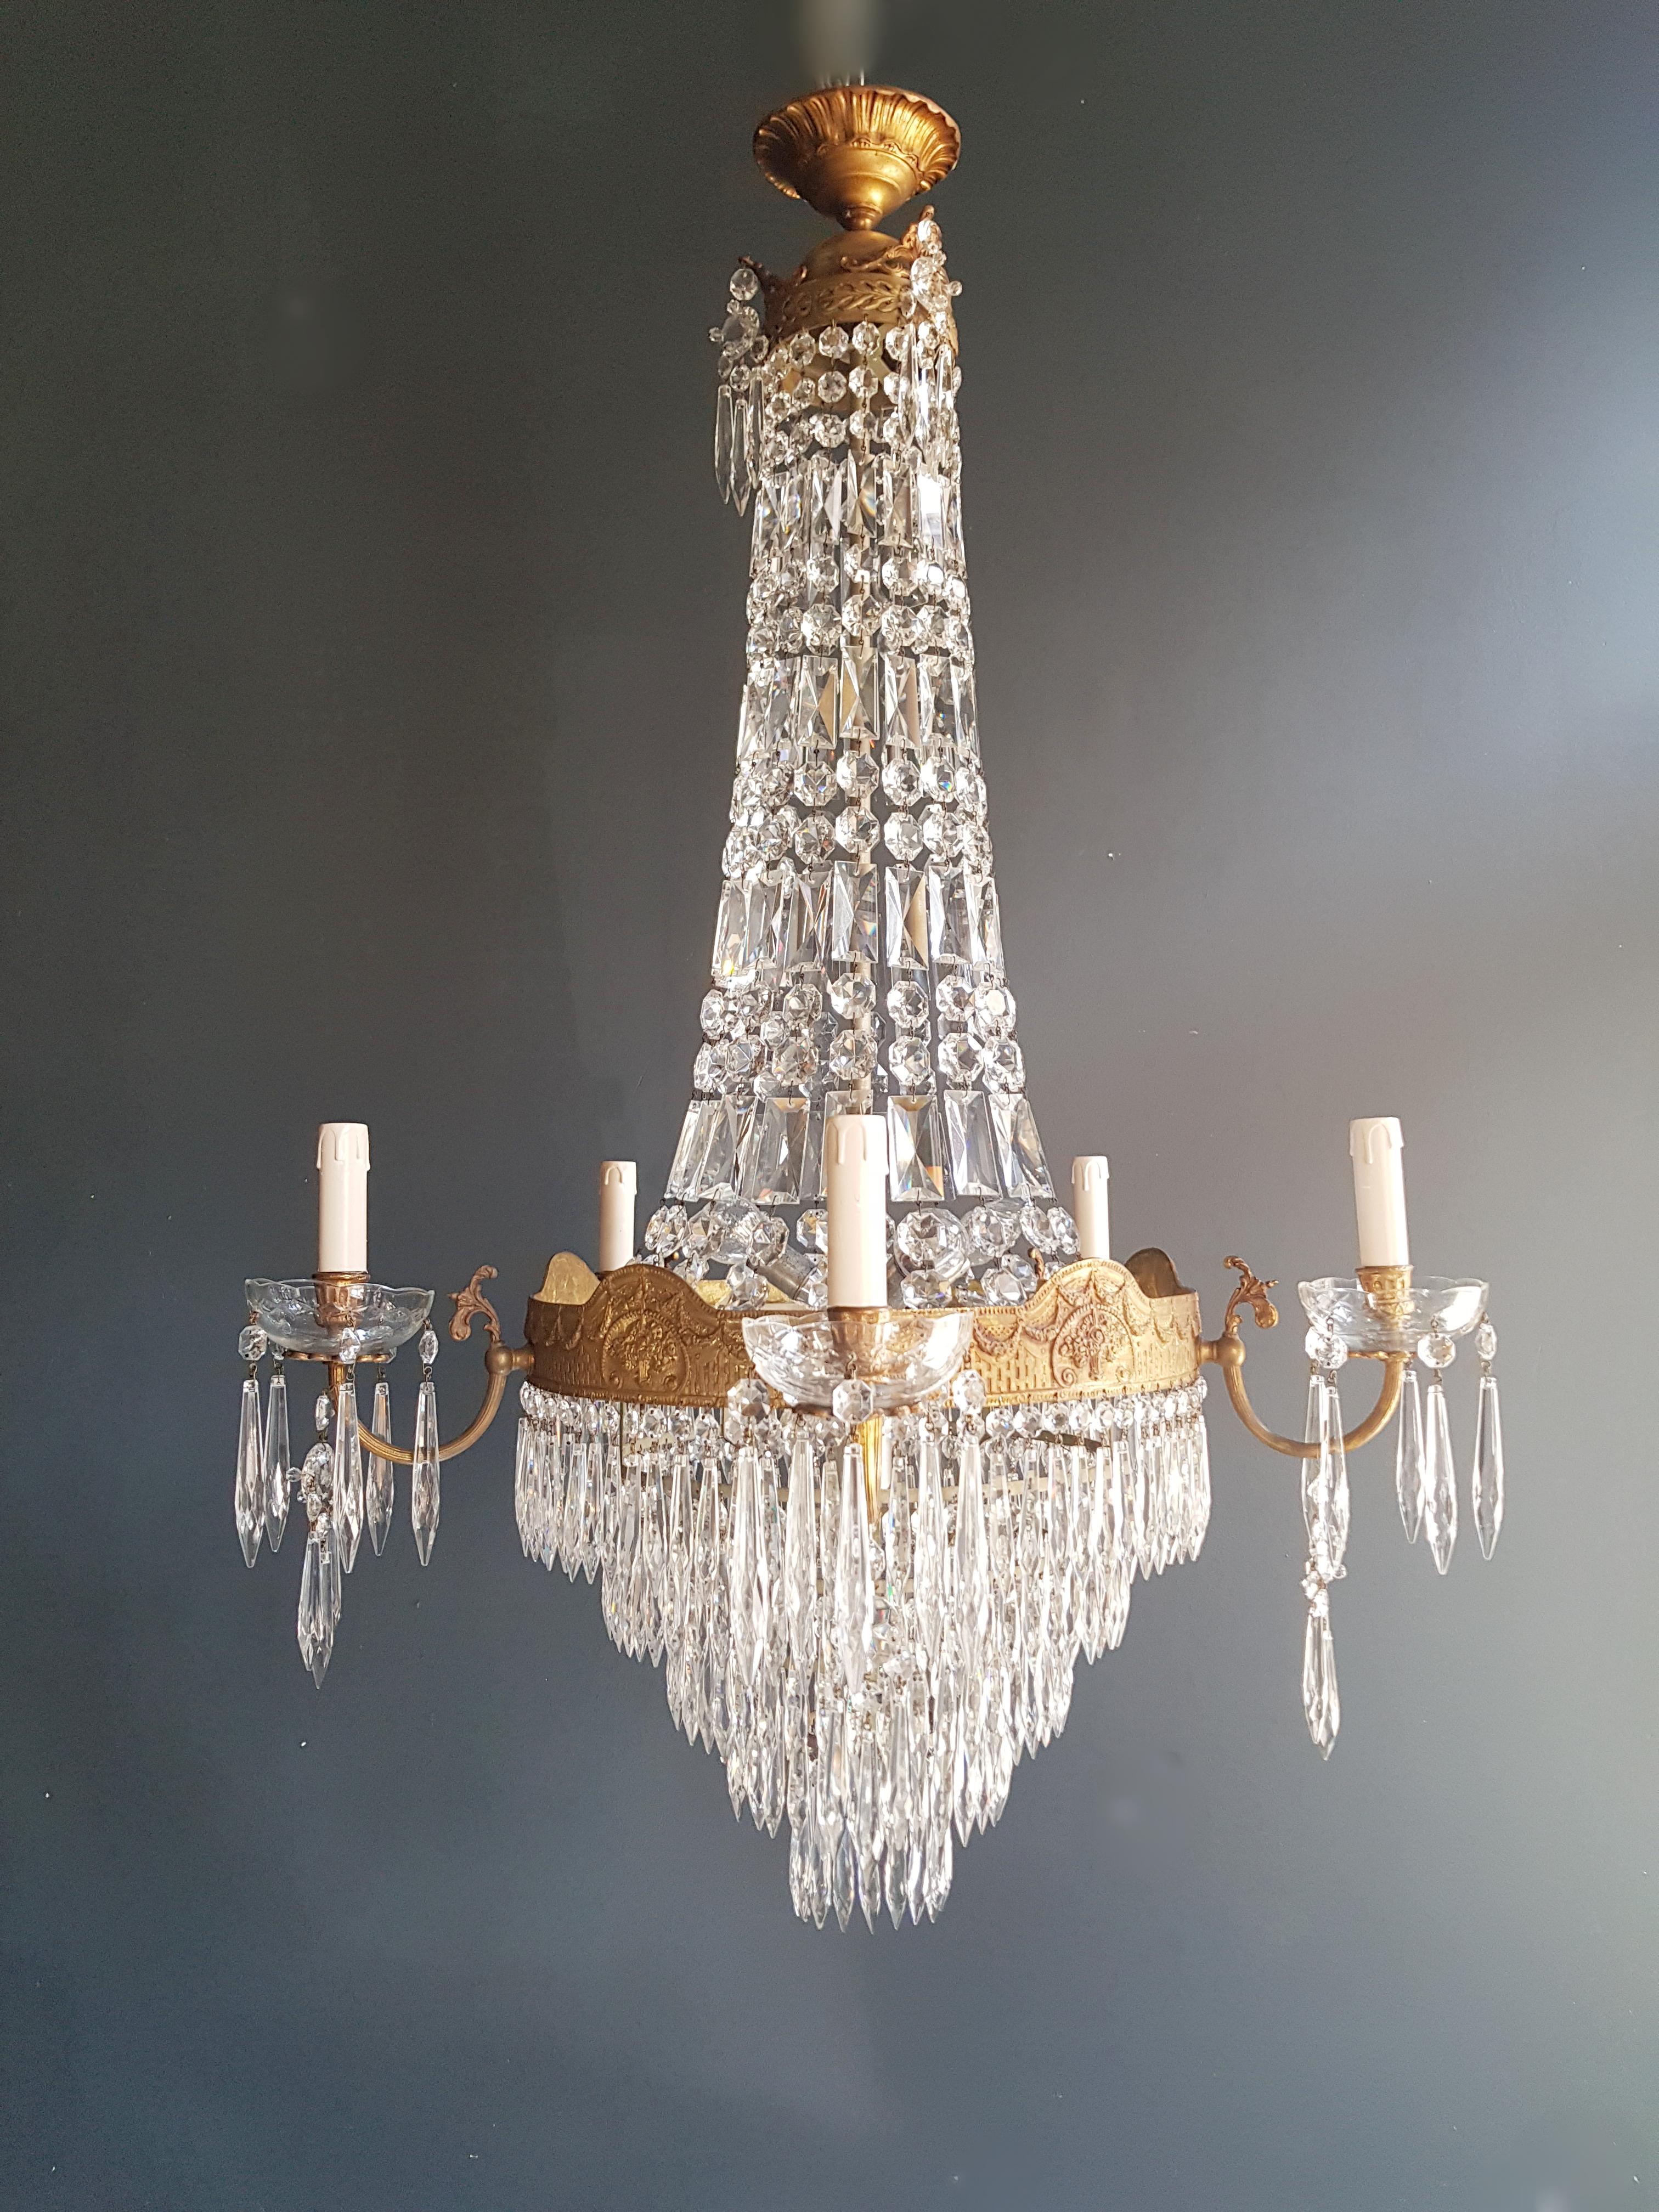 Montgolfiè Empire Sac a Pearl Chandelier Crystal Lustre Ceiling Lamp Antique WoW 4